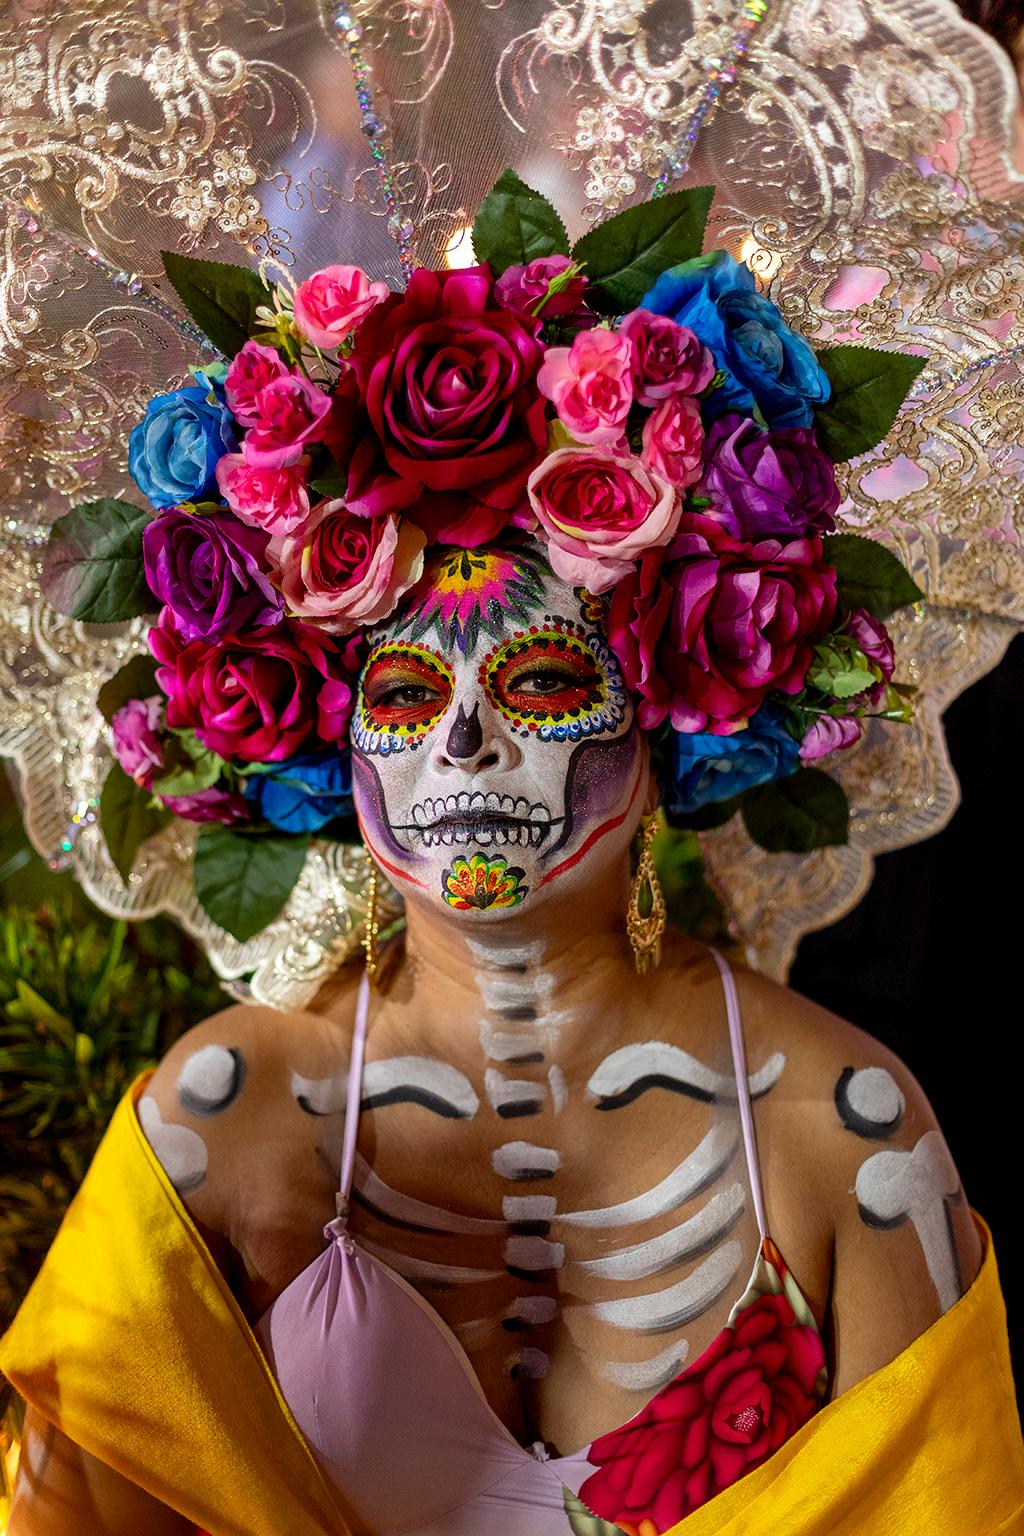  Cosmo Condina Portrait Photograph - “A crown of roses for death”, Day of the Dead, Dia de los Muertos, Mexico, 2023